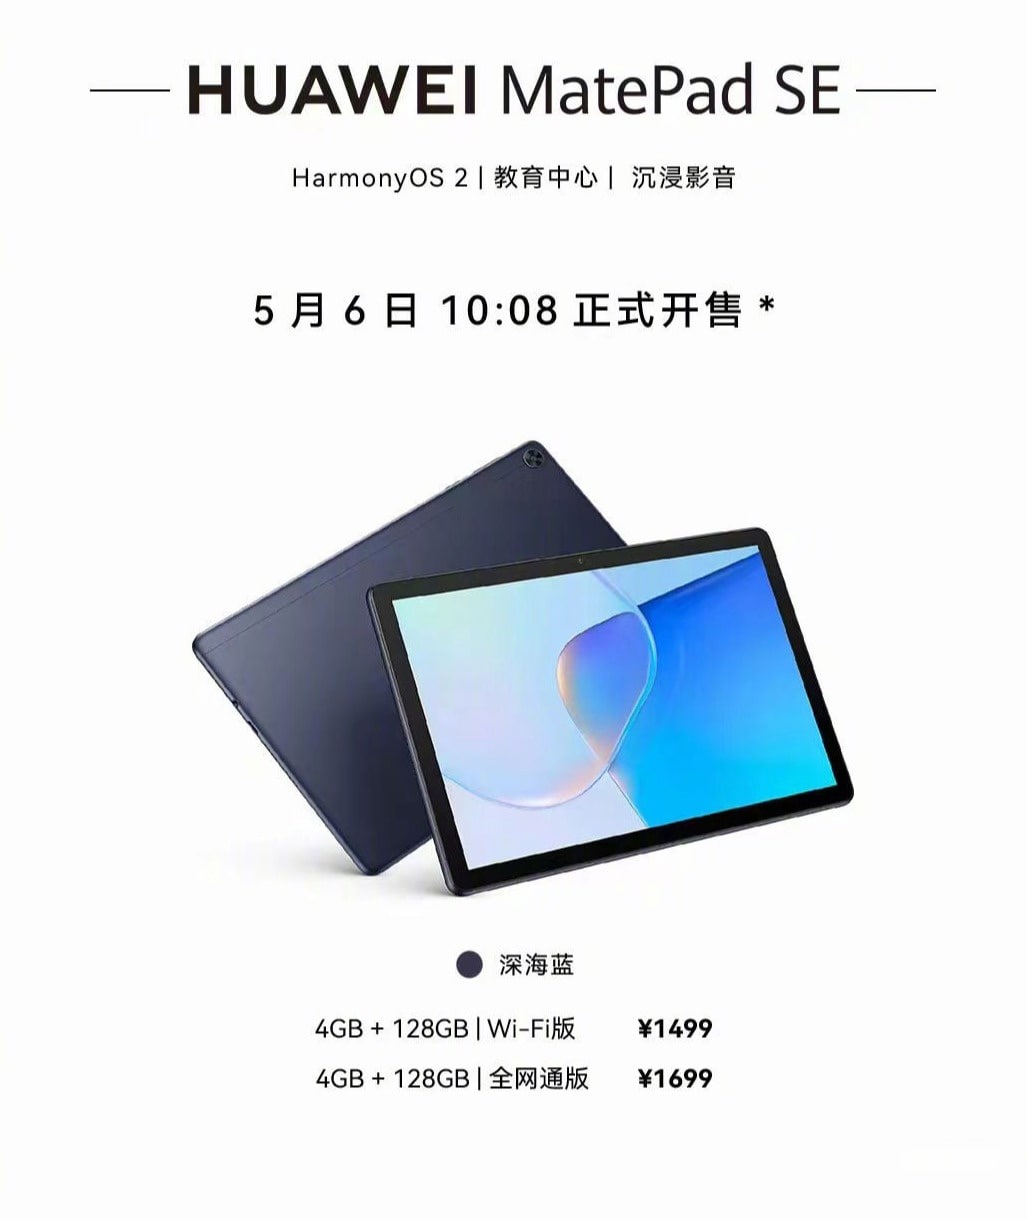 Huawei MatePad SE first sale